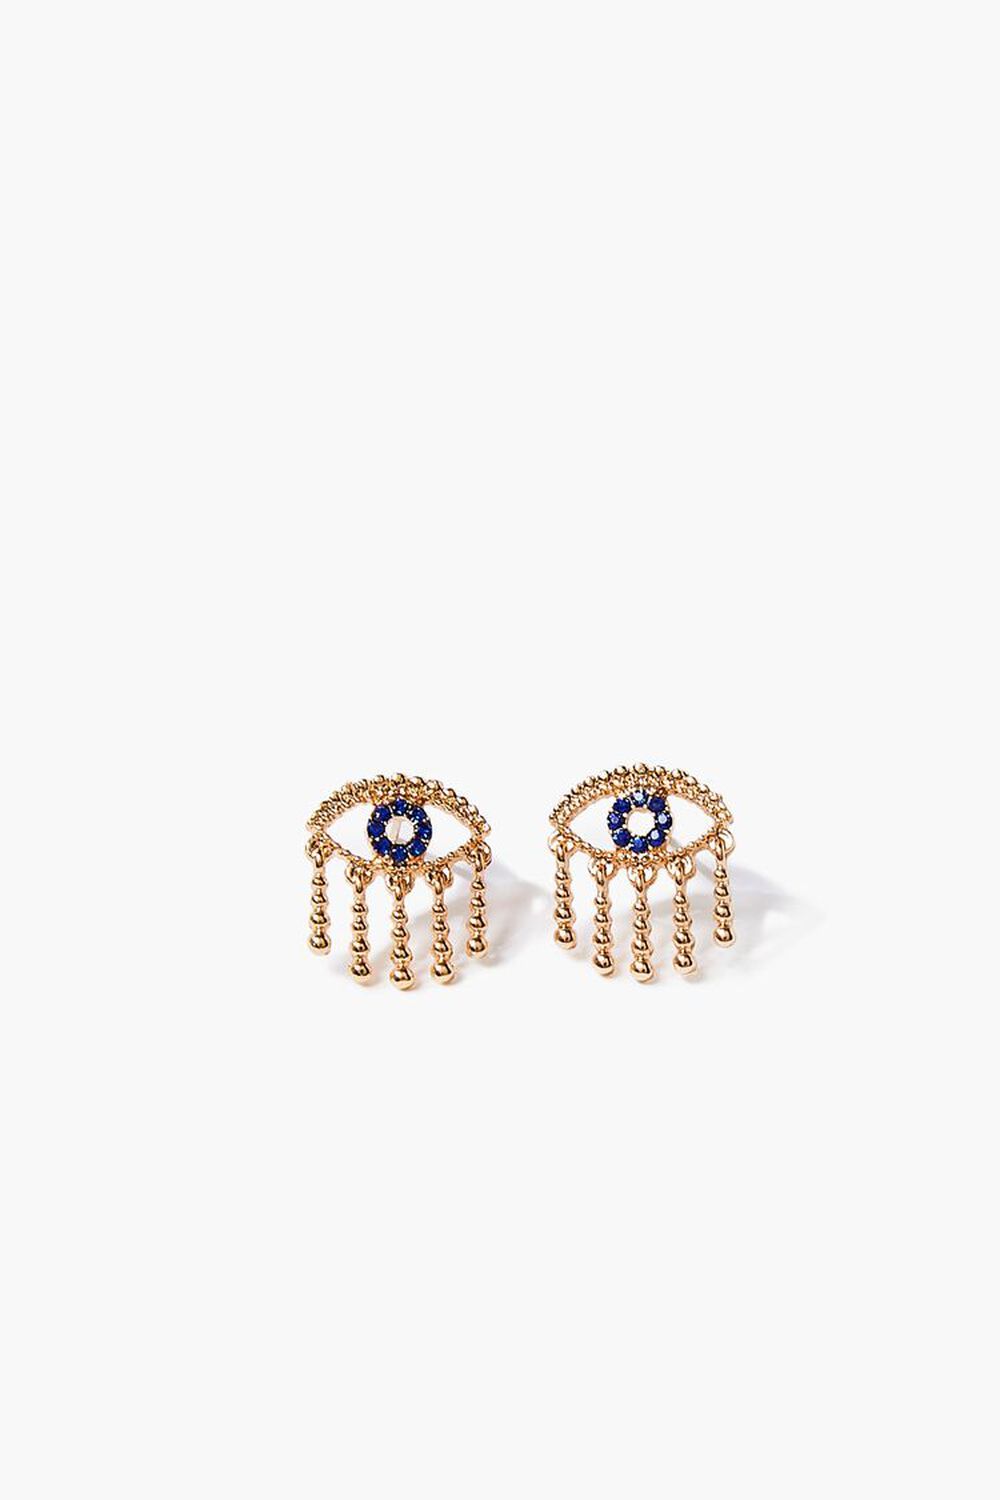 GOLD Rhinestone Eye Stud Earrings, image 1